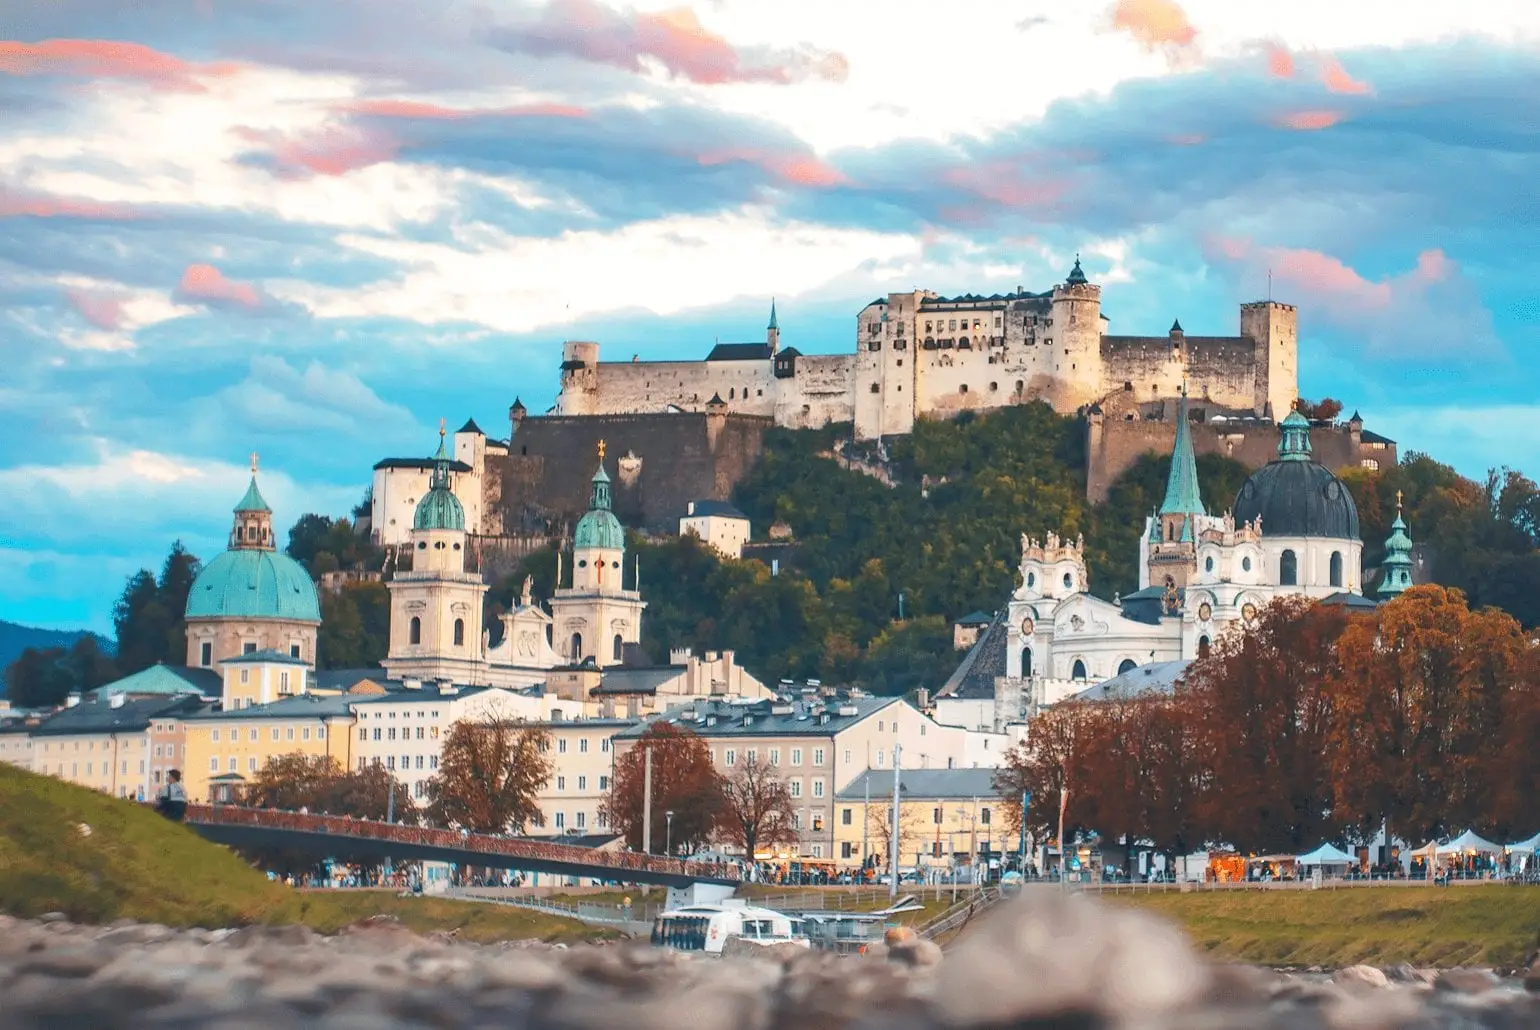 15-astonishing-facts-about-hohensalzburg-castle